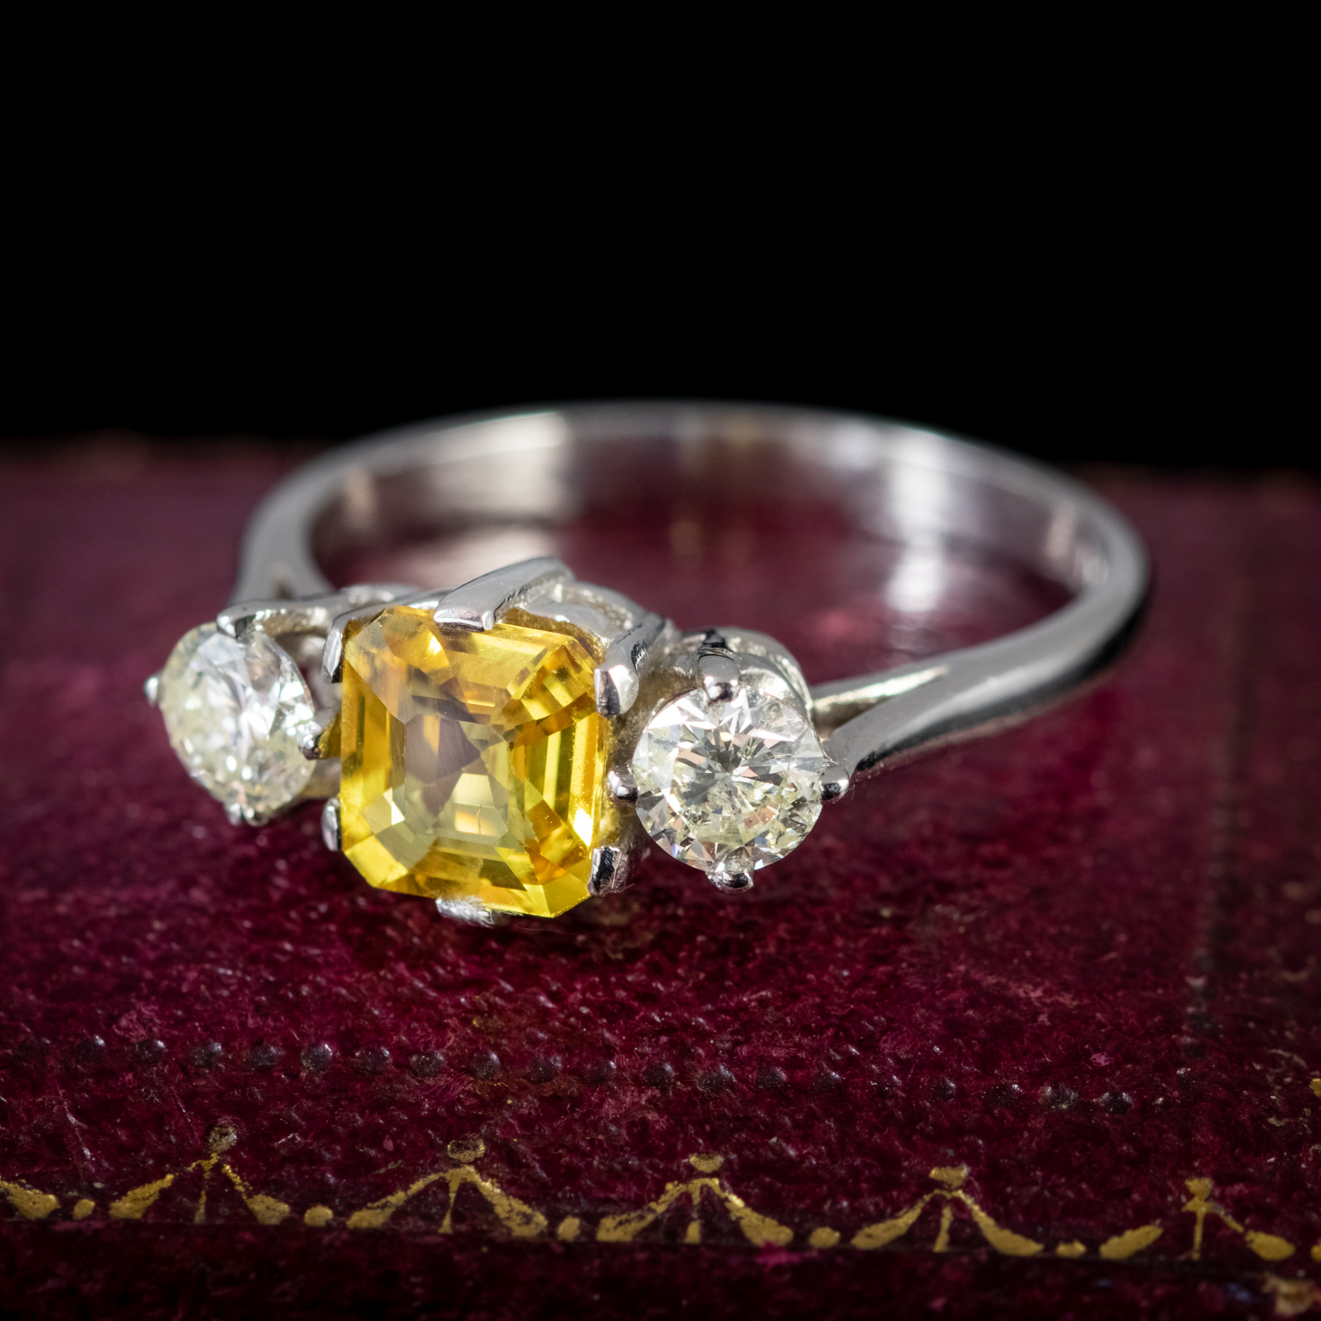 Art Deco Style Yellow Sapphire Diamond Trilogy Ring Platinum 1.45ct Sapphire